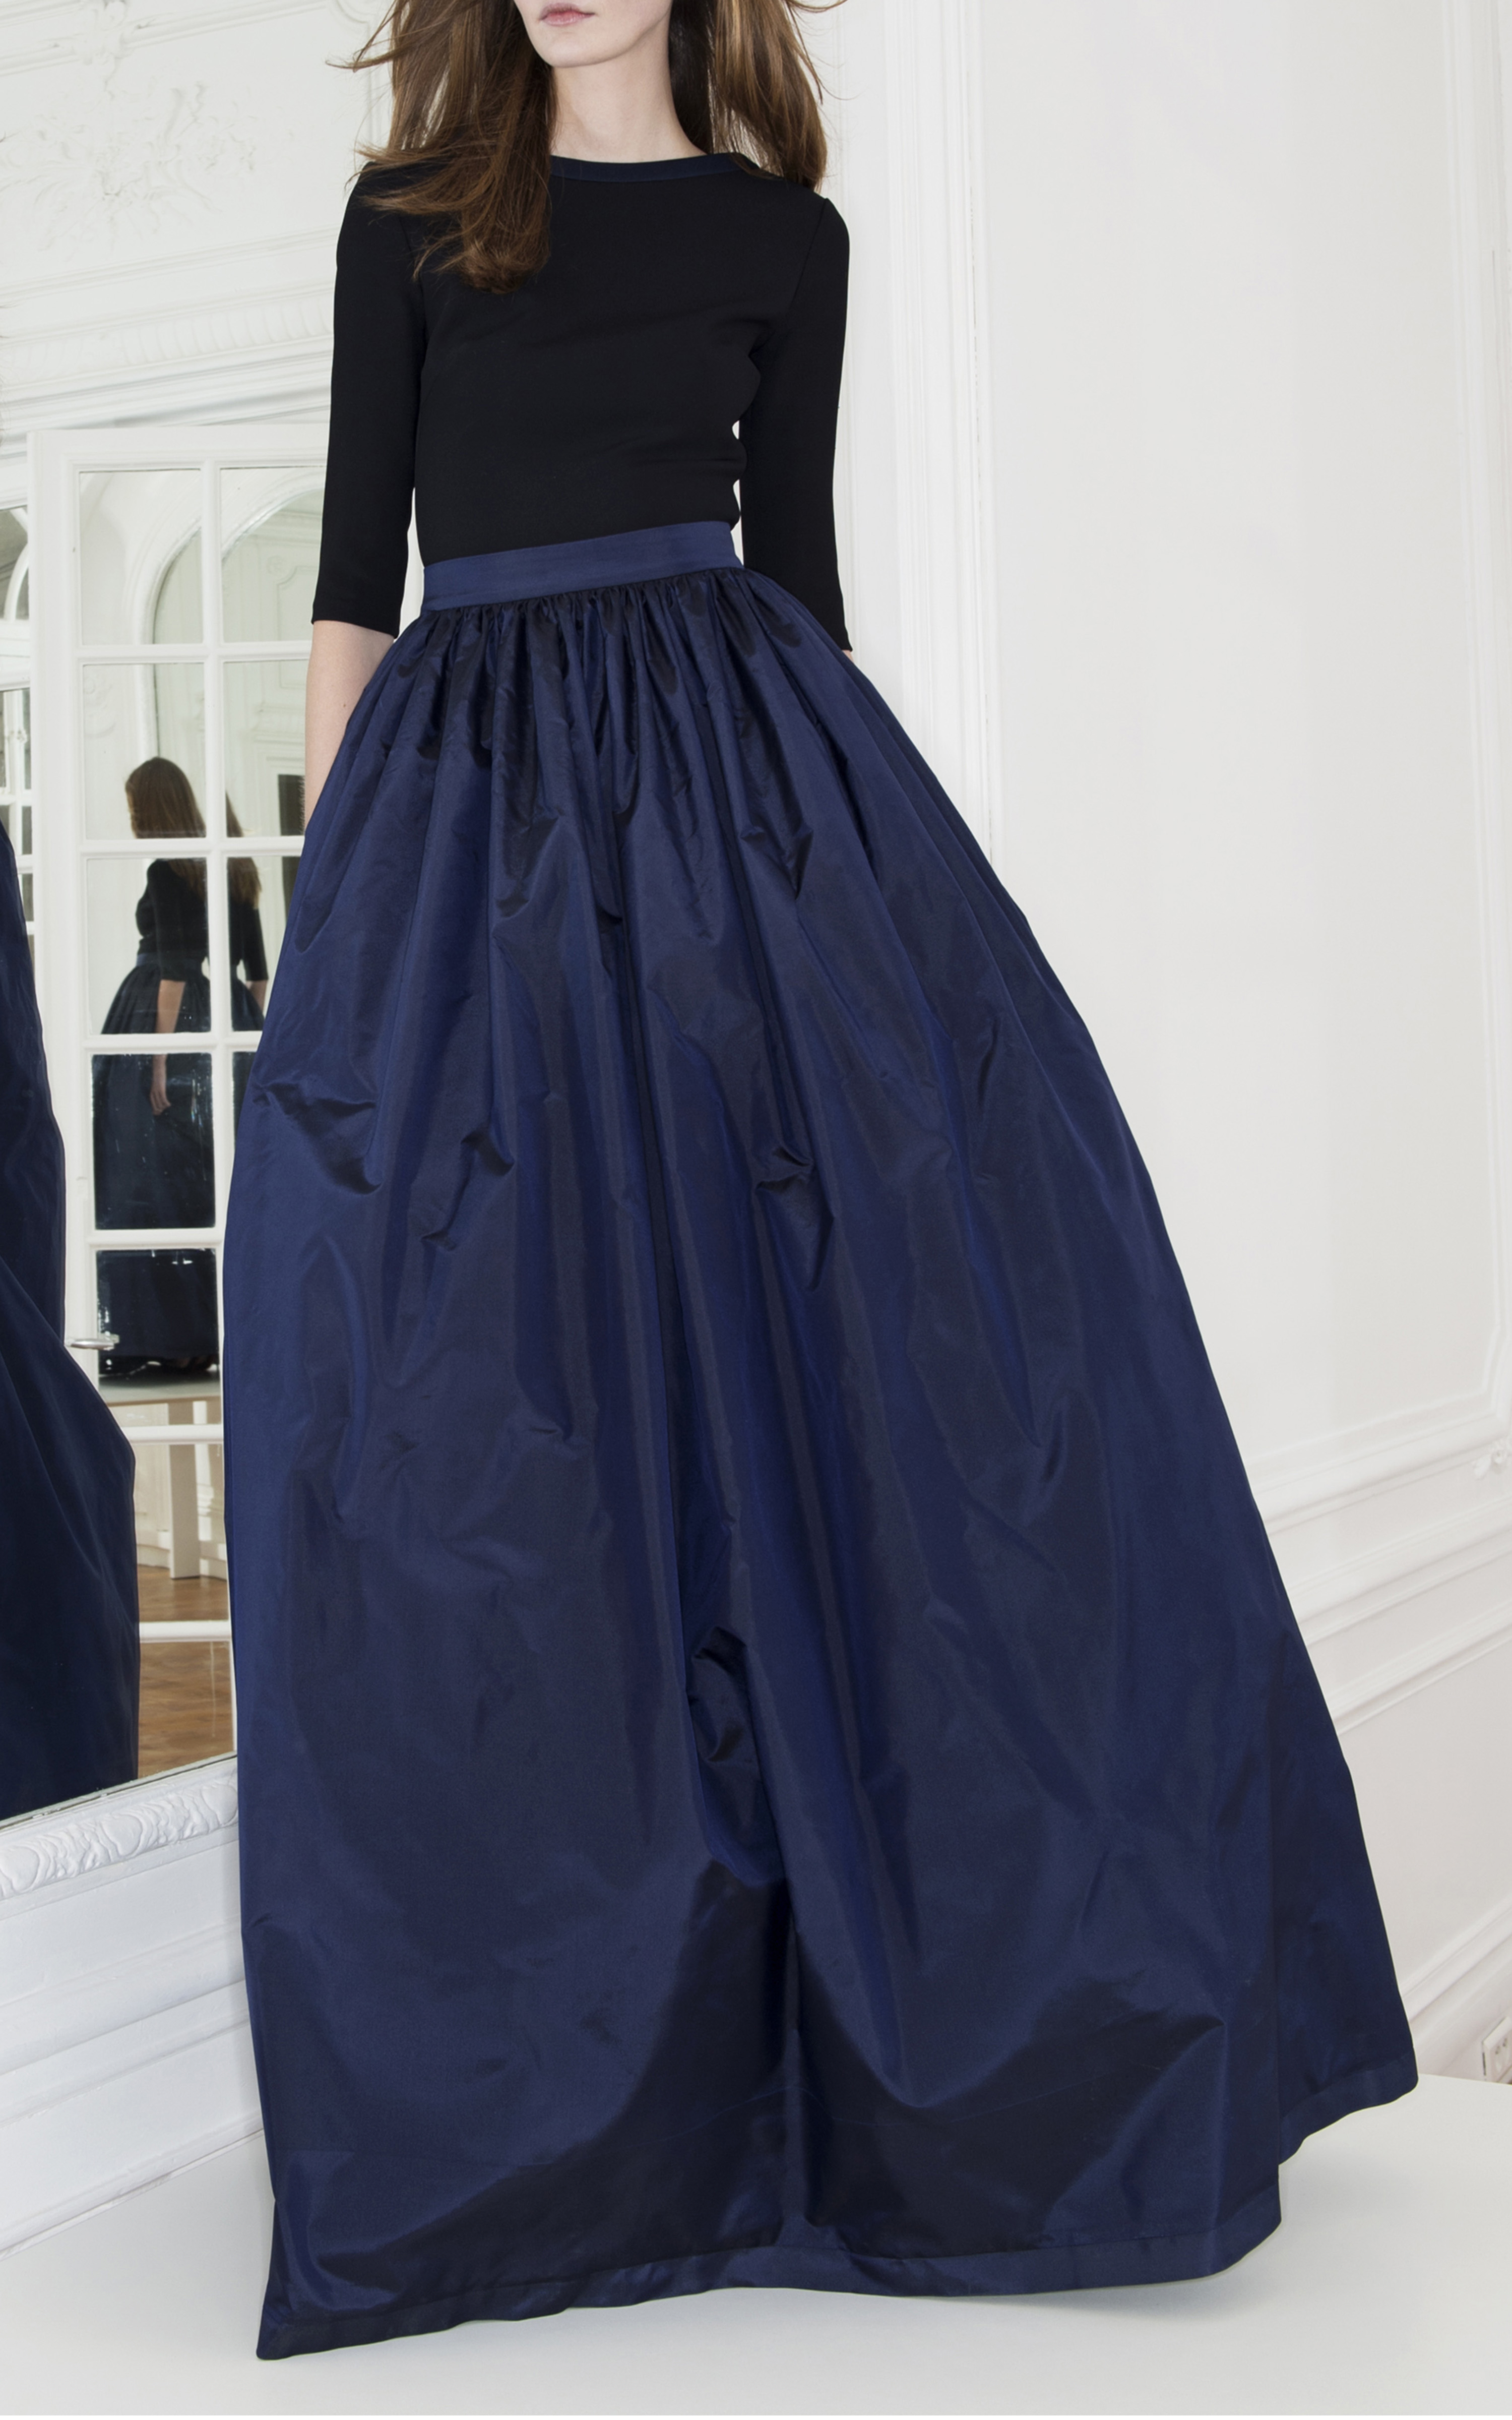 Lyst - Martin Grant Silk Tulle Layered Ballerina Skirt in Blue